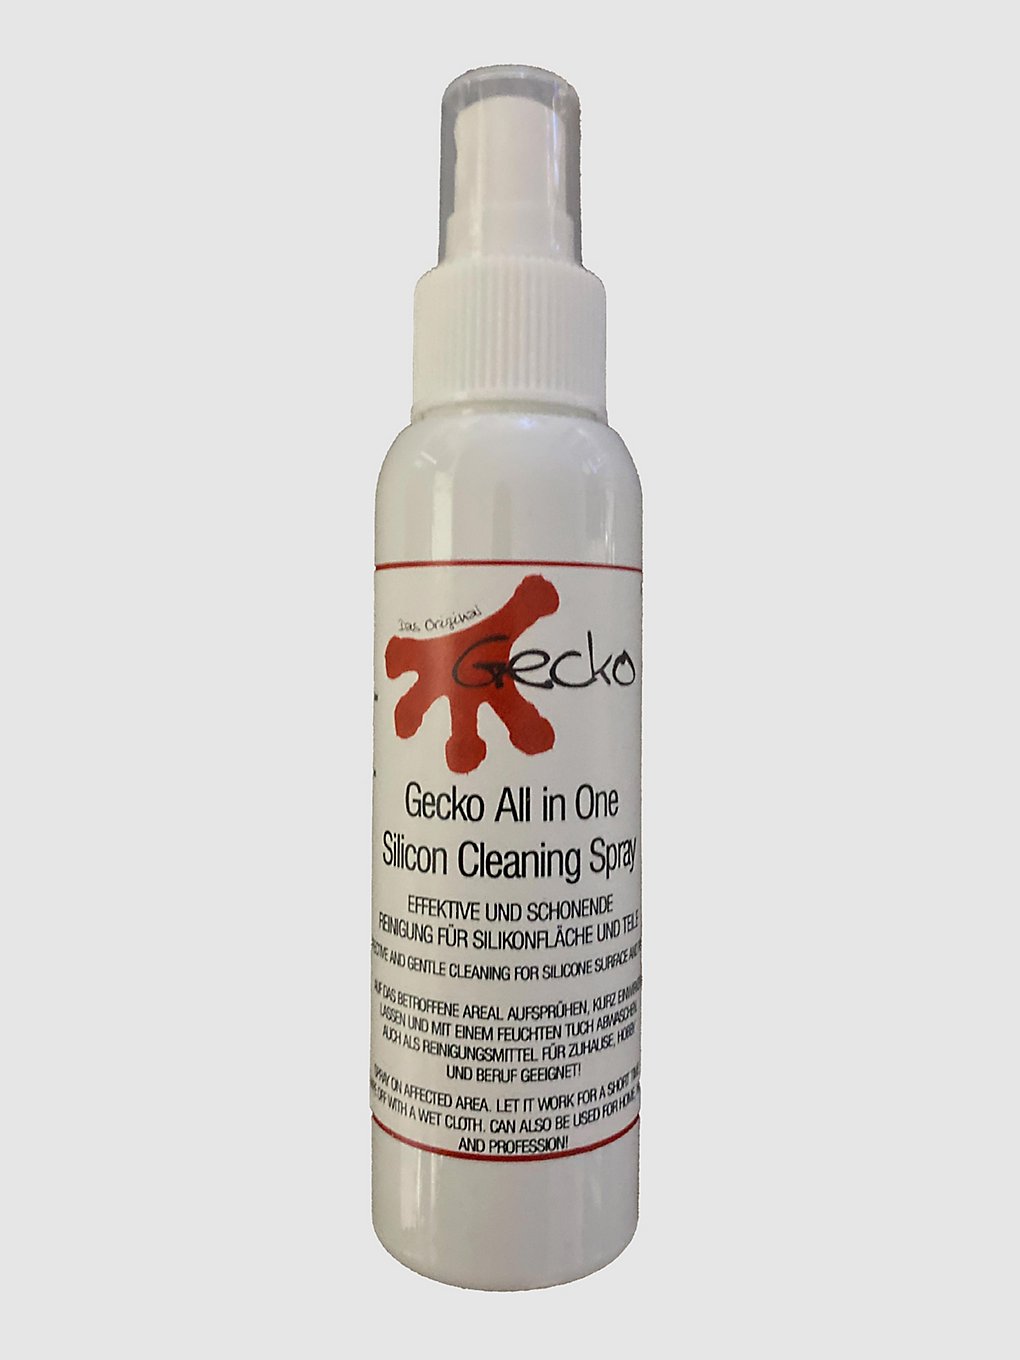 Gecko Silicon Cleaning Spray uni kaufen